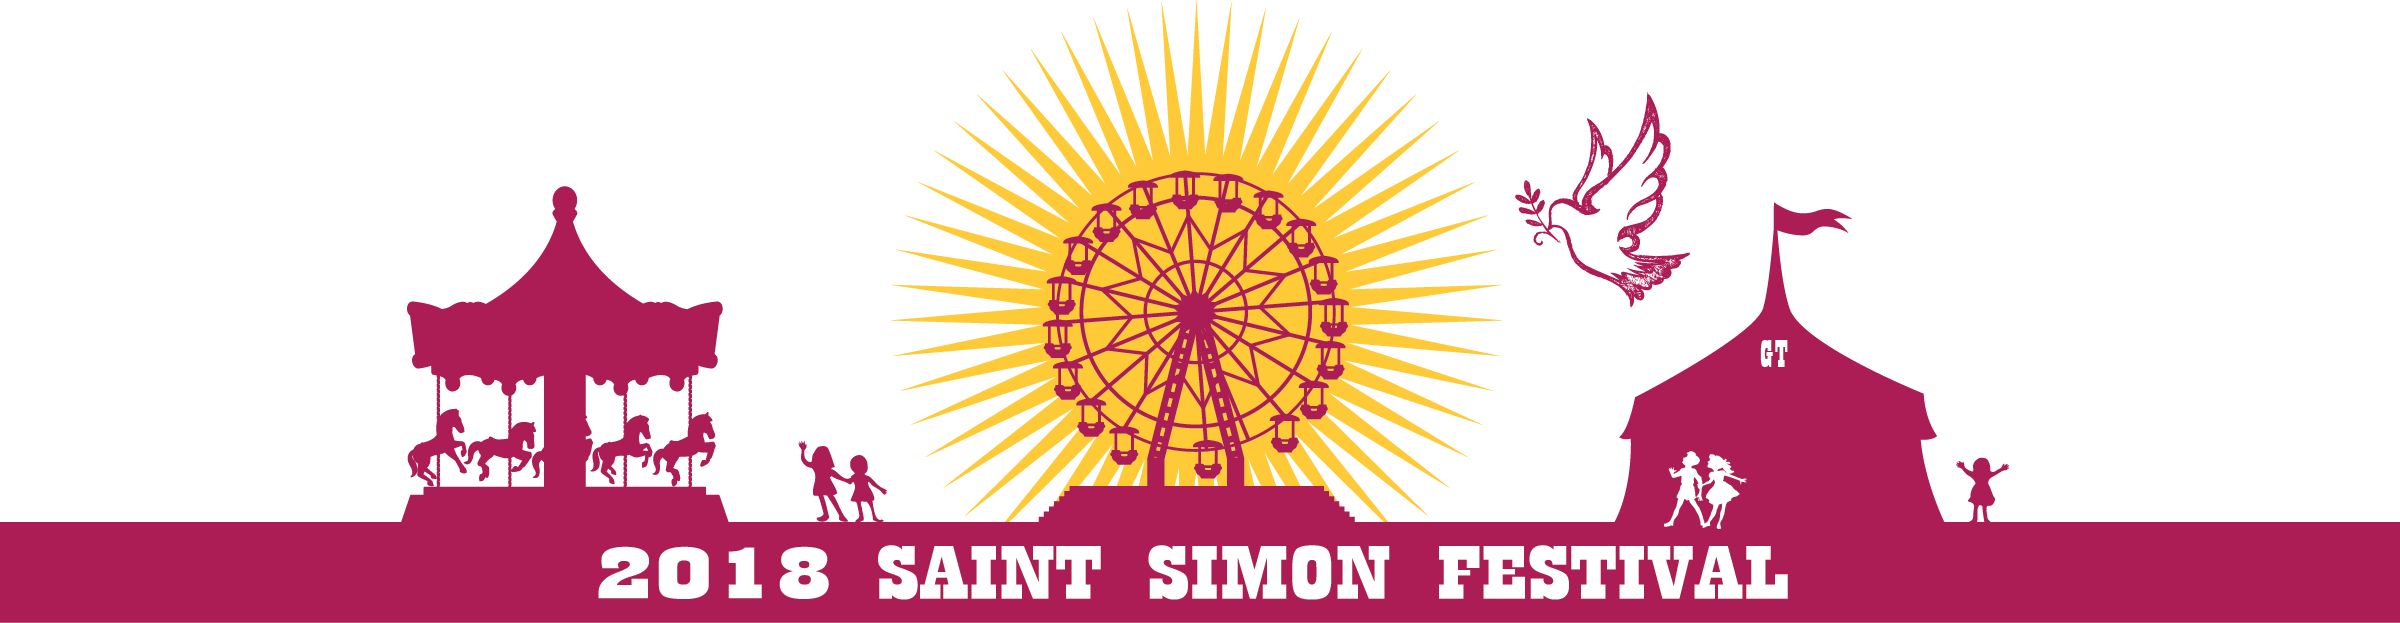 Saint Simon Festival